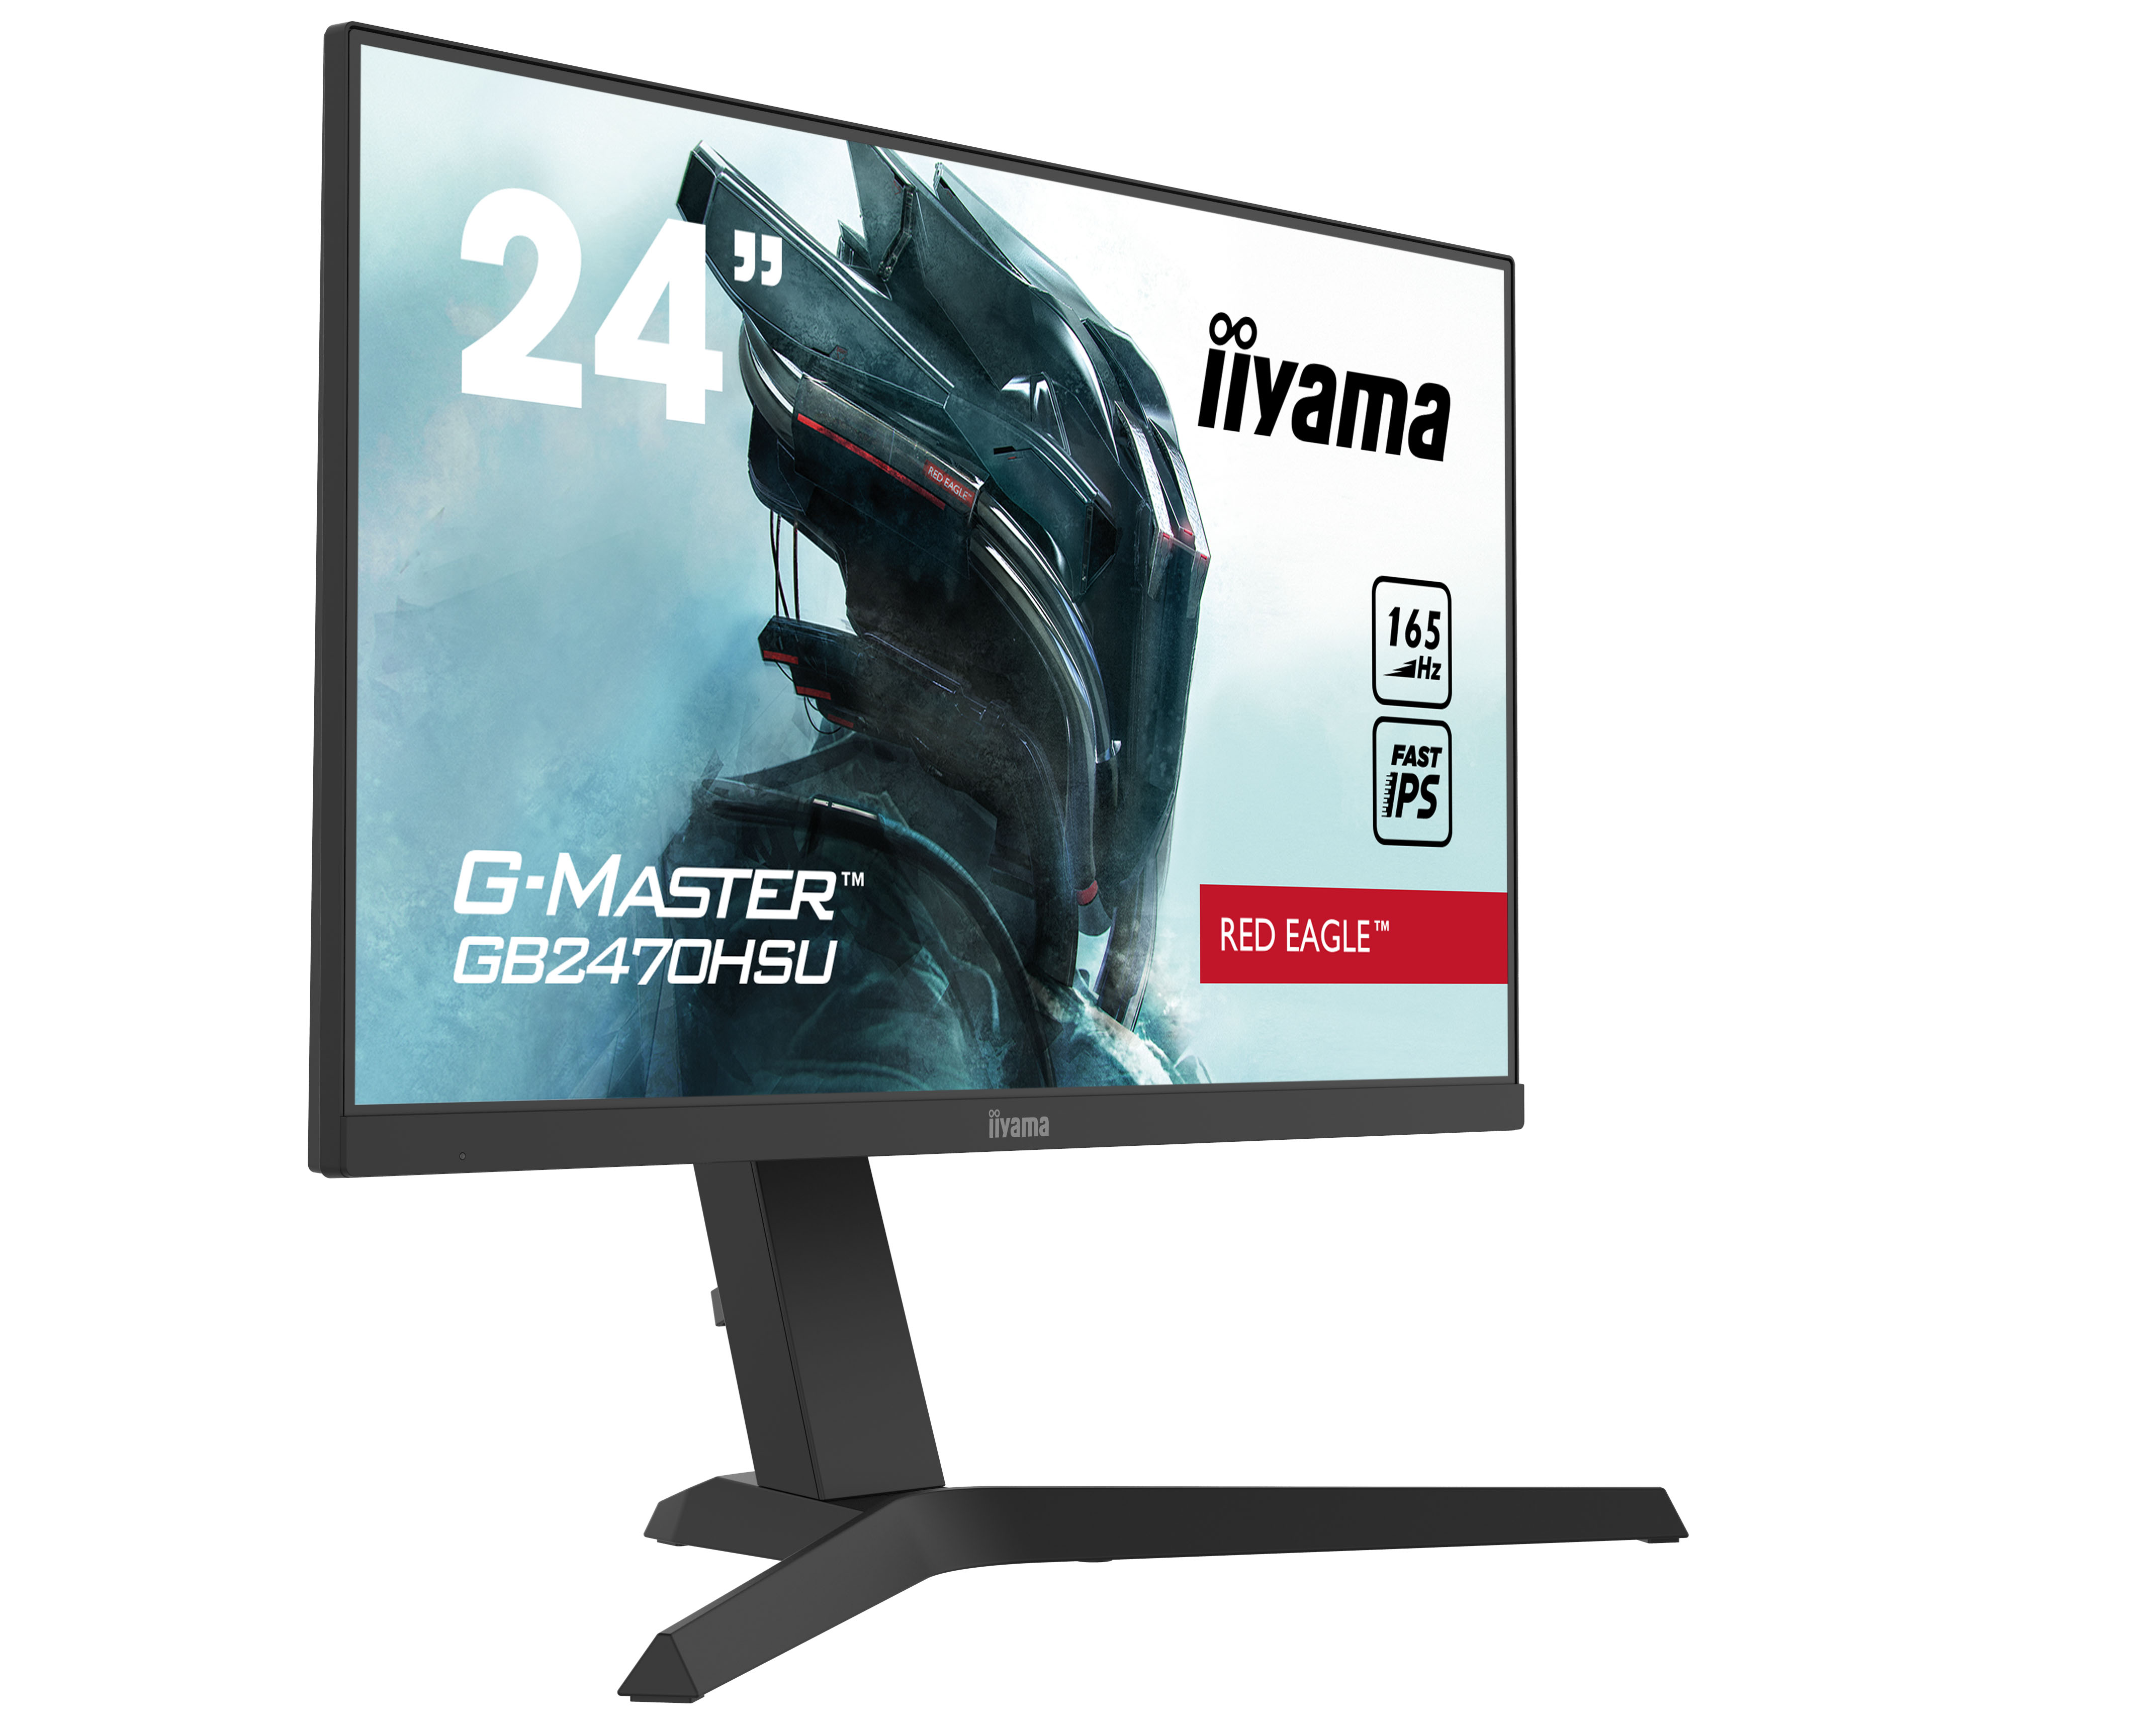 iiyama GB2470HSU-B1 Gaming Monitor Unboxing – 1080p, 165Hz, Fast IPS Panel  